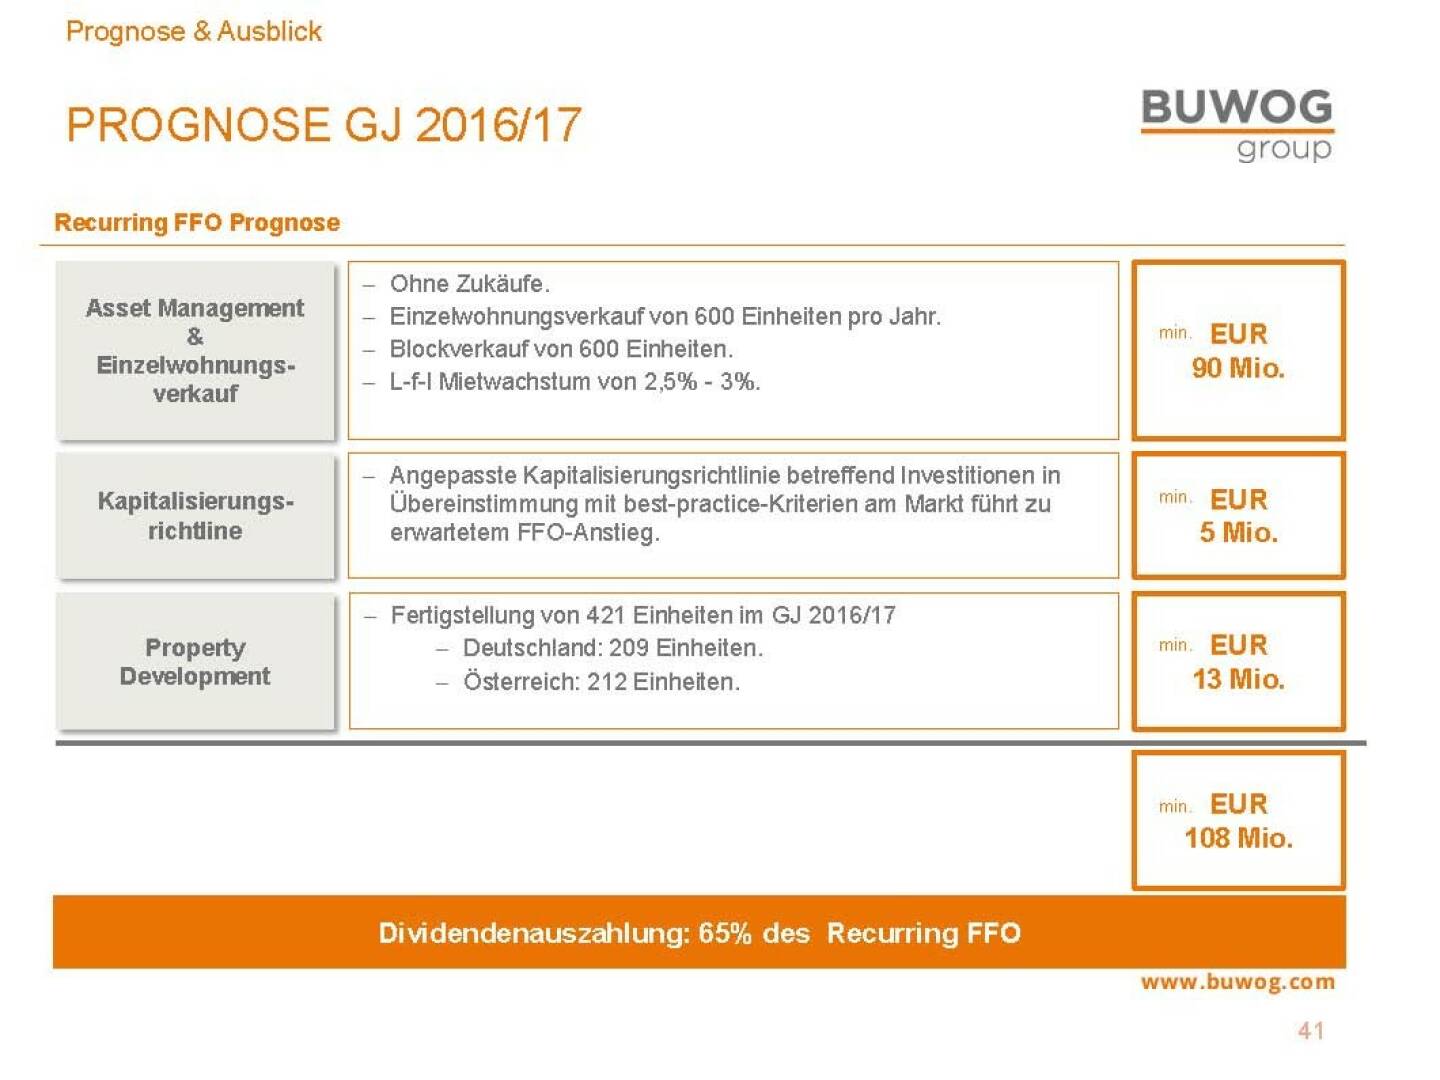 Buwog Group - Prognose GJ 2016/17